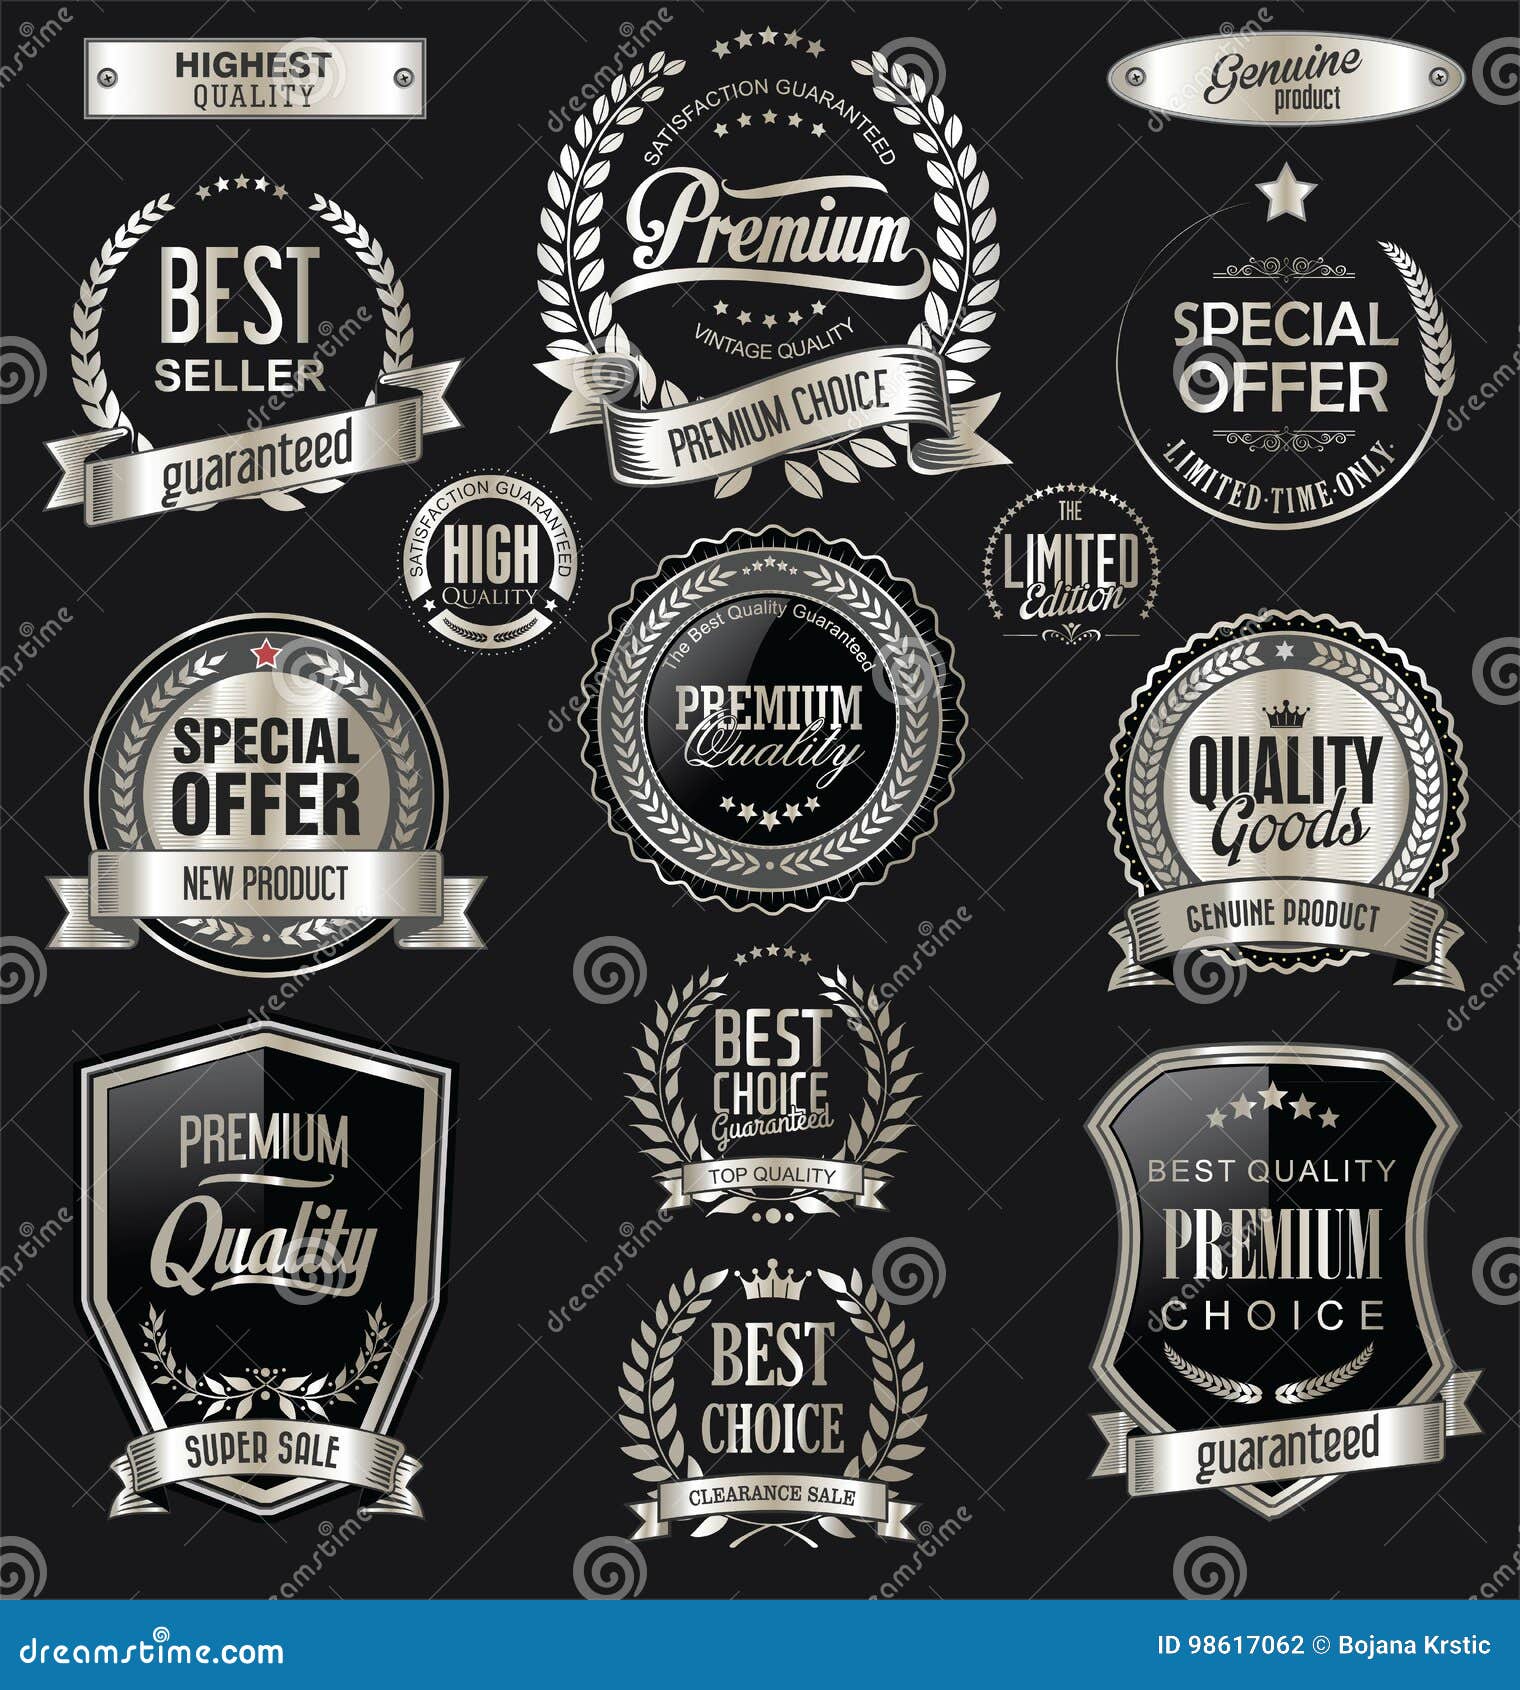 Luxury Gold Badges Quality Labels Premium Set Of 5 Stars Rating